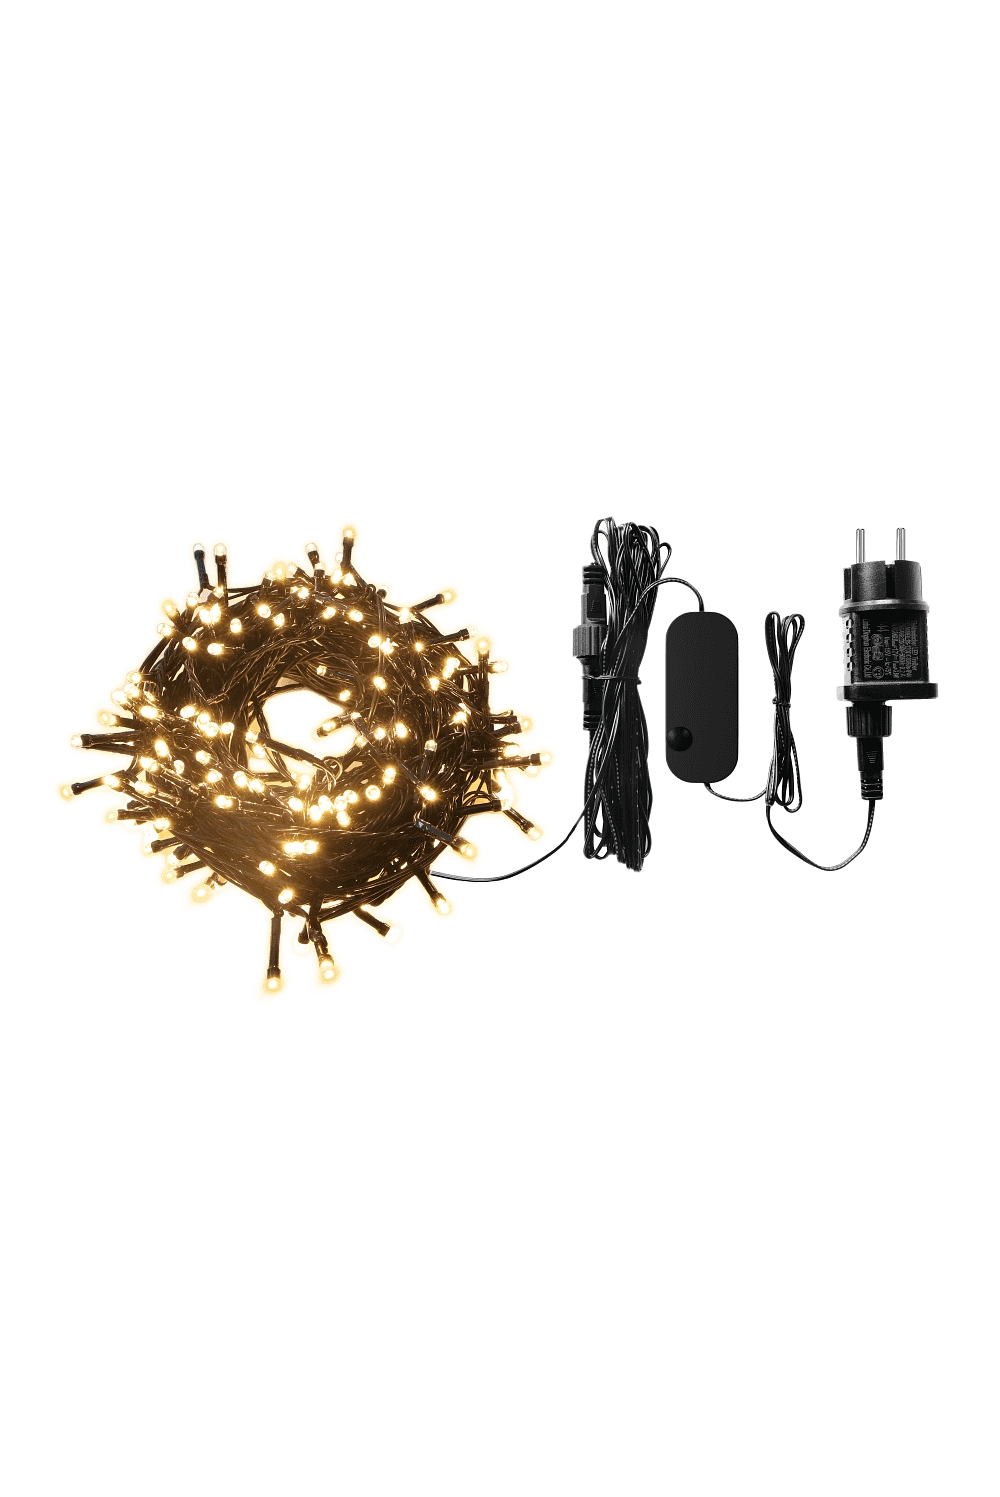 Woox Smart 20 meter LED Christmas Lighting String | R5168